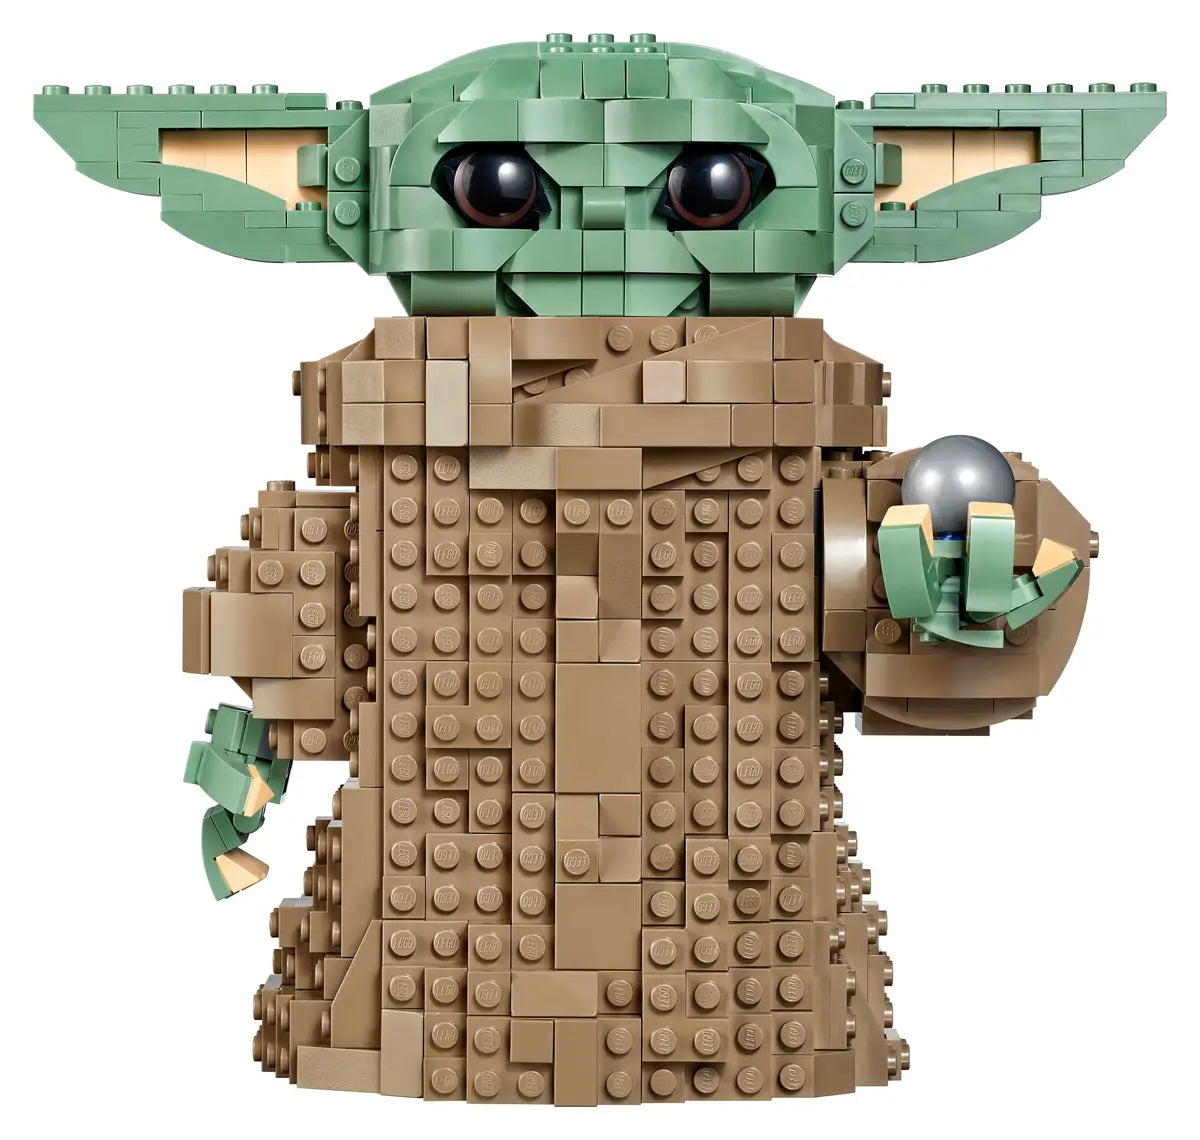 LEGO Star Wars - The Child - 75318